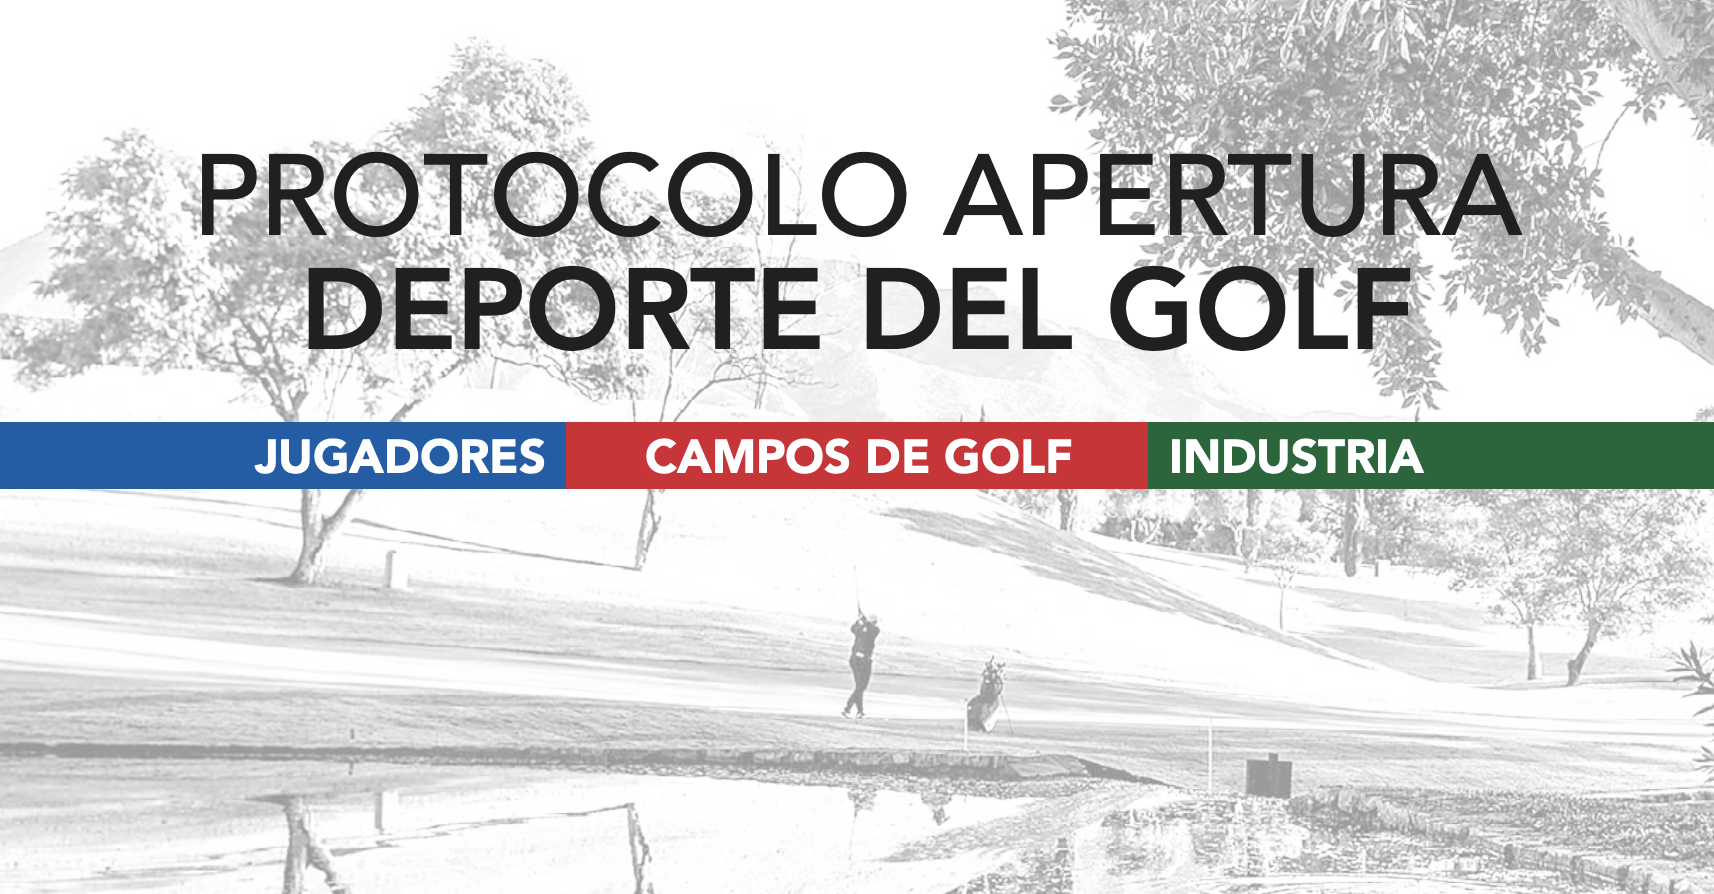 Protocolo apertura campos de golf COVID19 Joaquin Molpeceres Sanchez Encin Golf Olivar